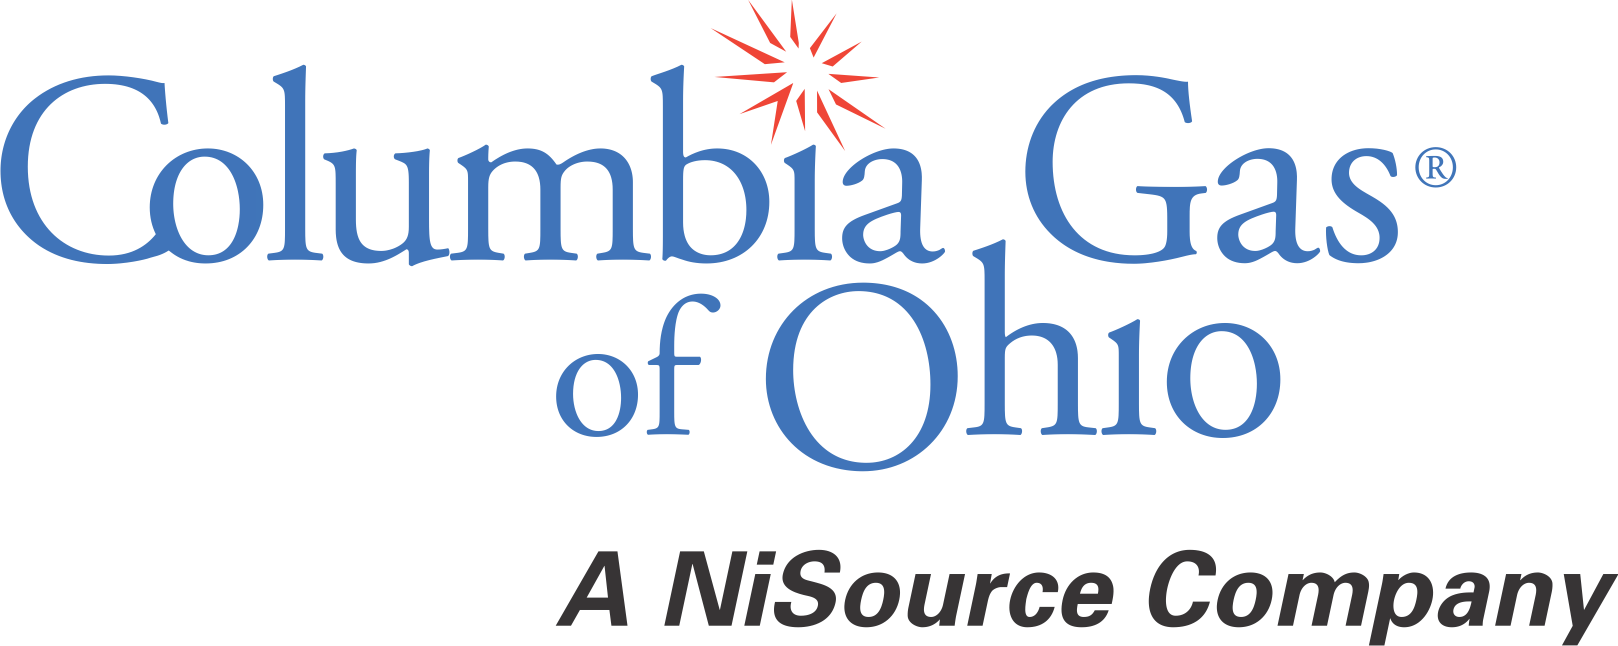 Columbia Gas of Ohio logo